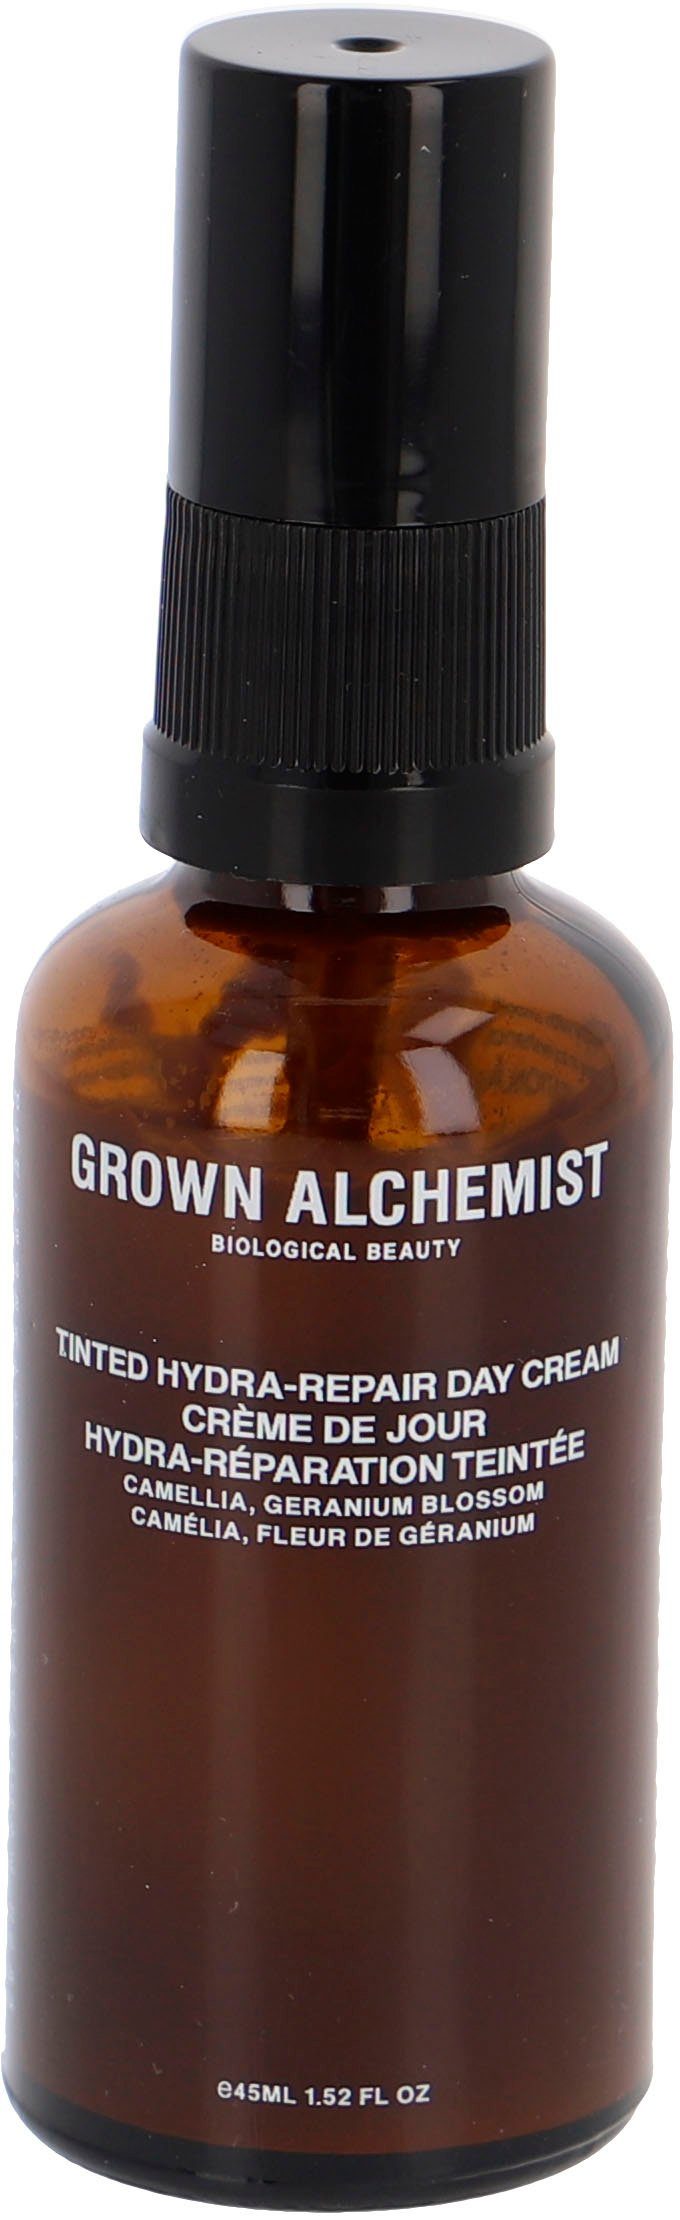 Gesichtscreme Cream, ALCHEMIST Getönte Tinted Day Camellia, Geranium Blossom GROWN Hydra-Repair